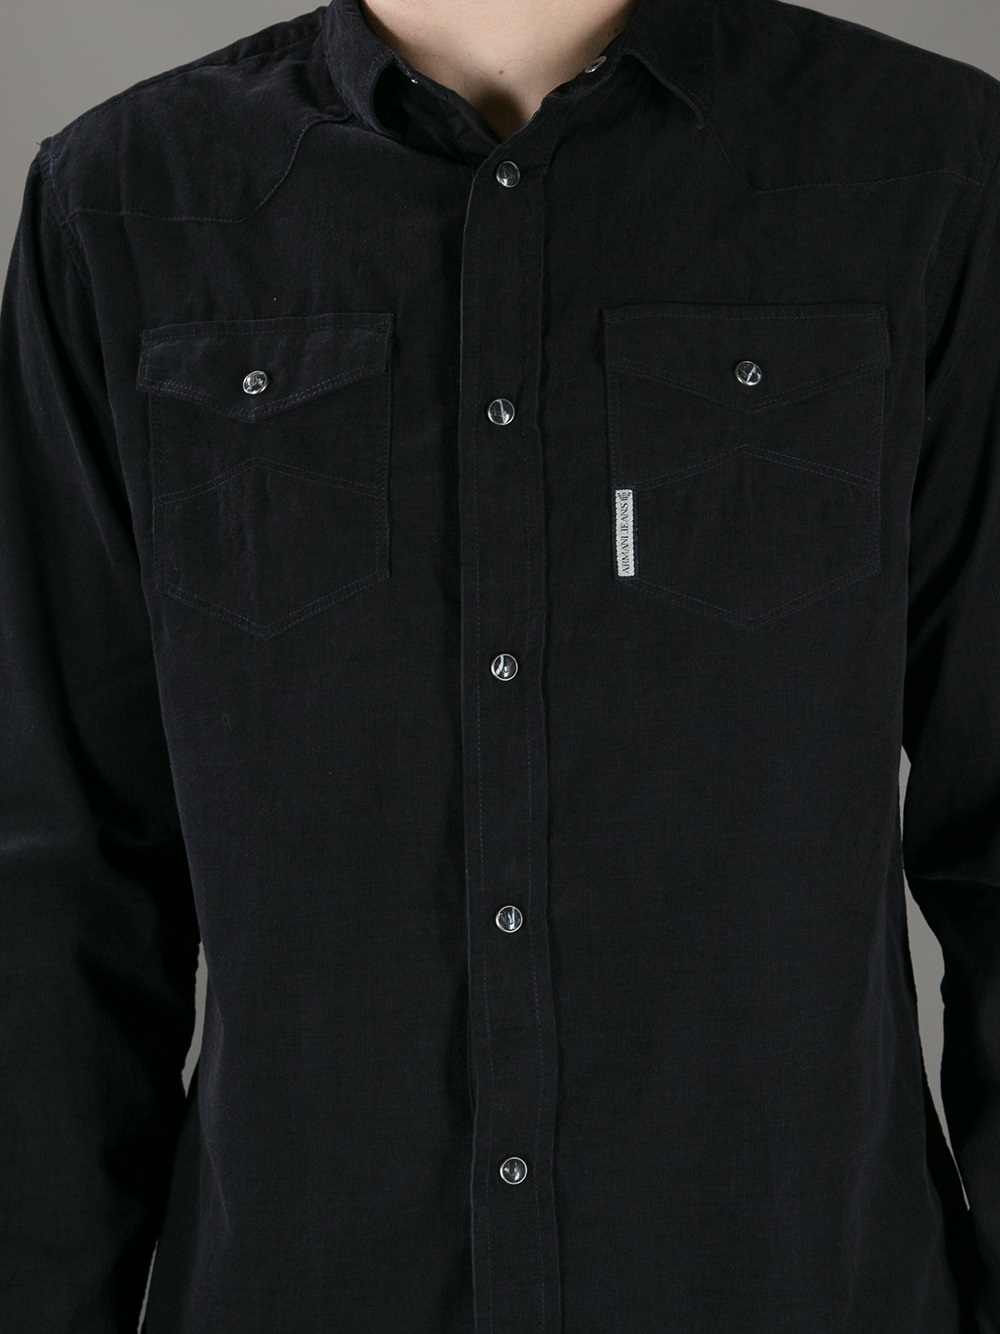 Armani Jeans Corduroy Shirt in Black for Men | Lyst